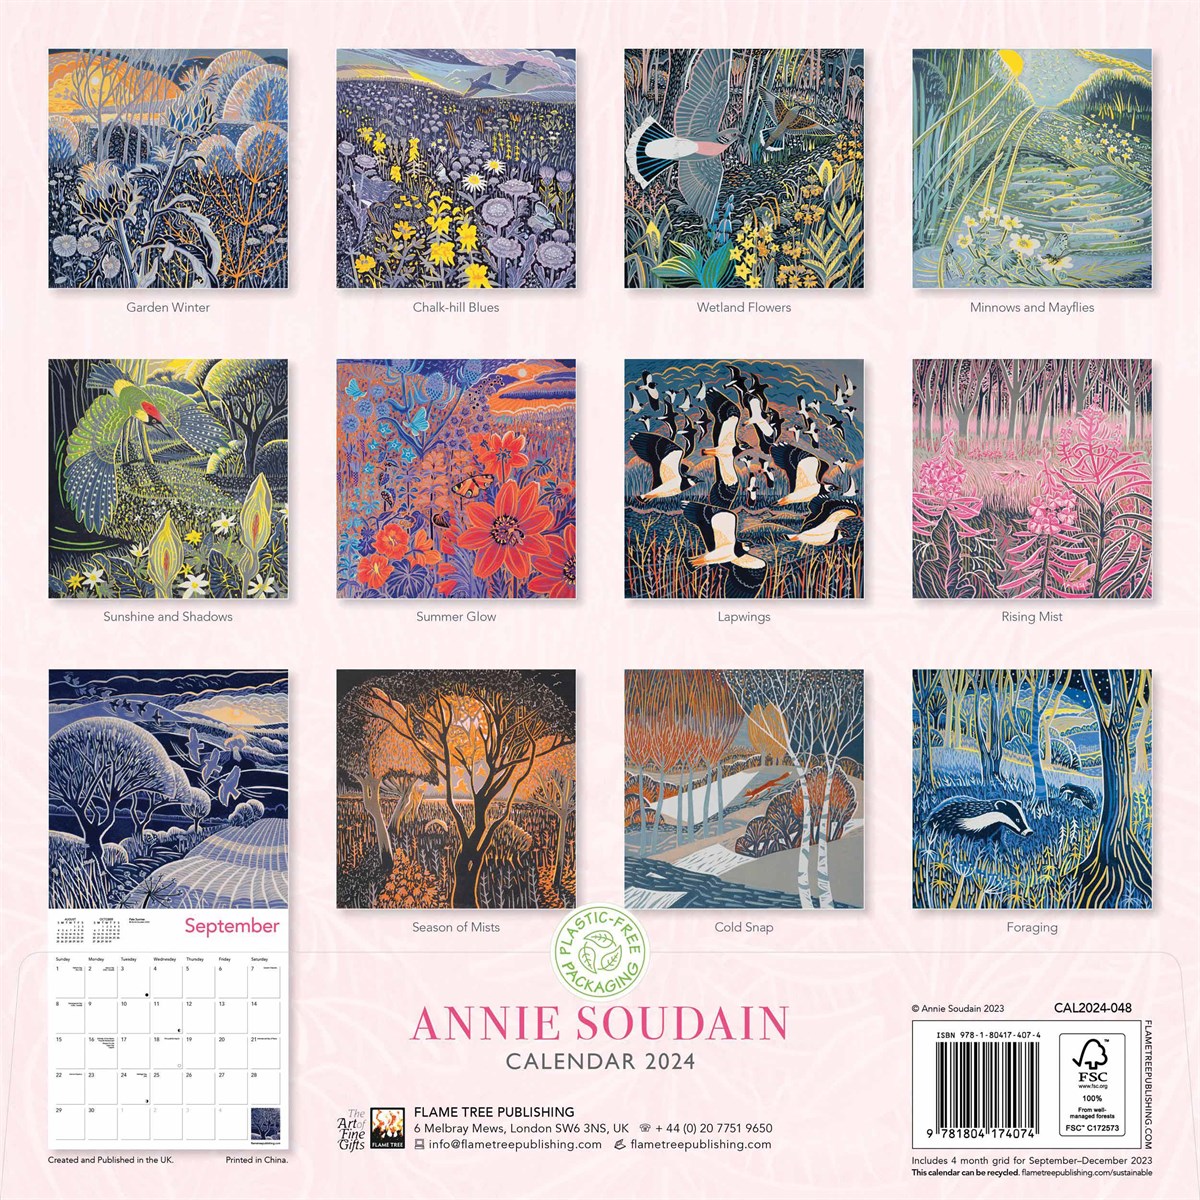 annie-soudain-wall-calendar-2024-by-flame-tree-publishing-240961